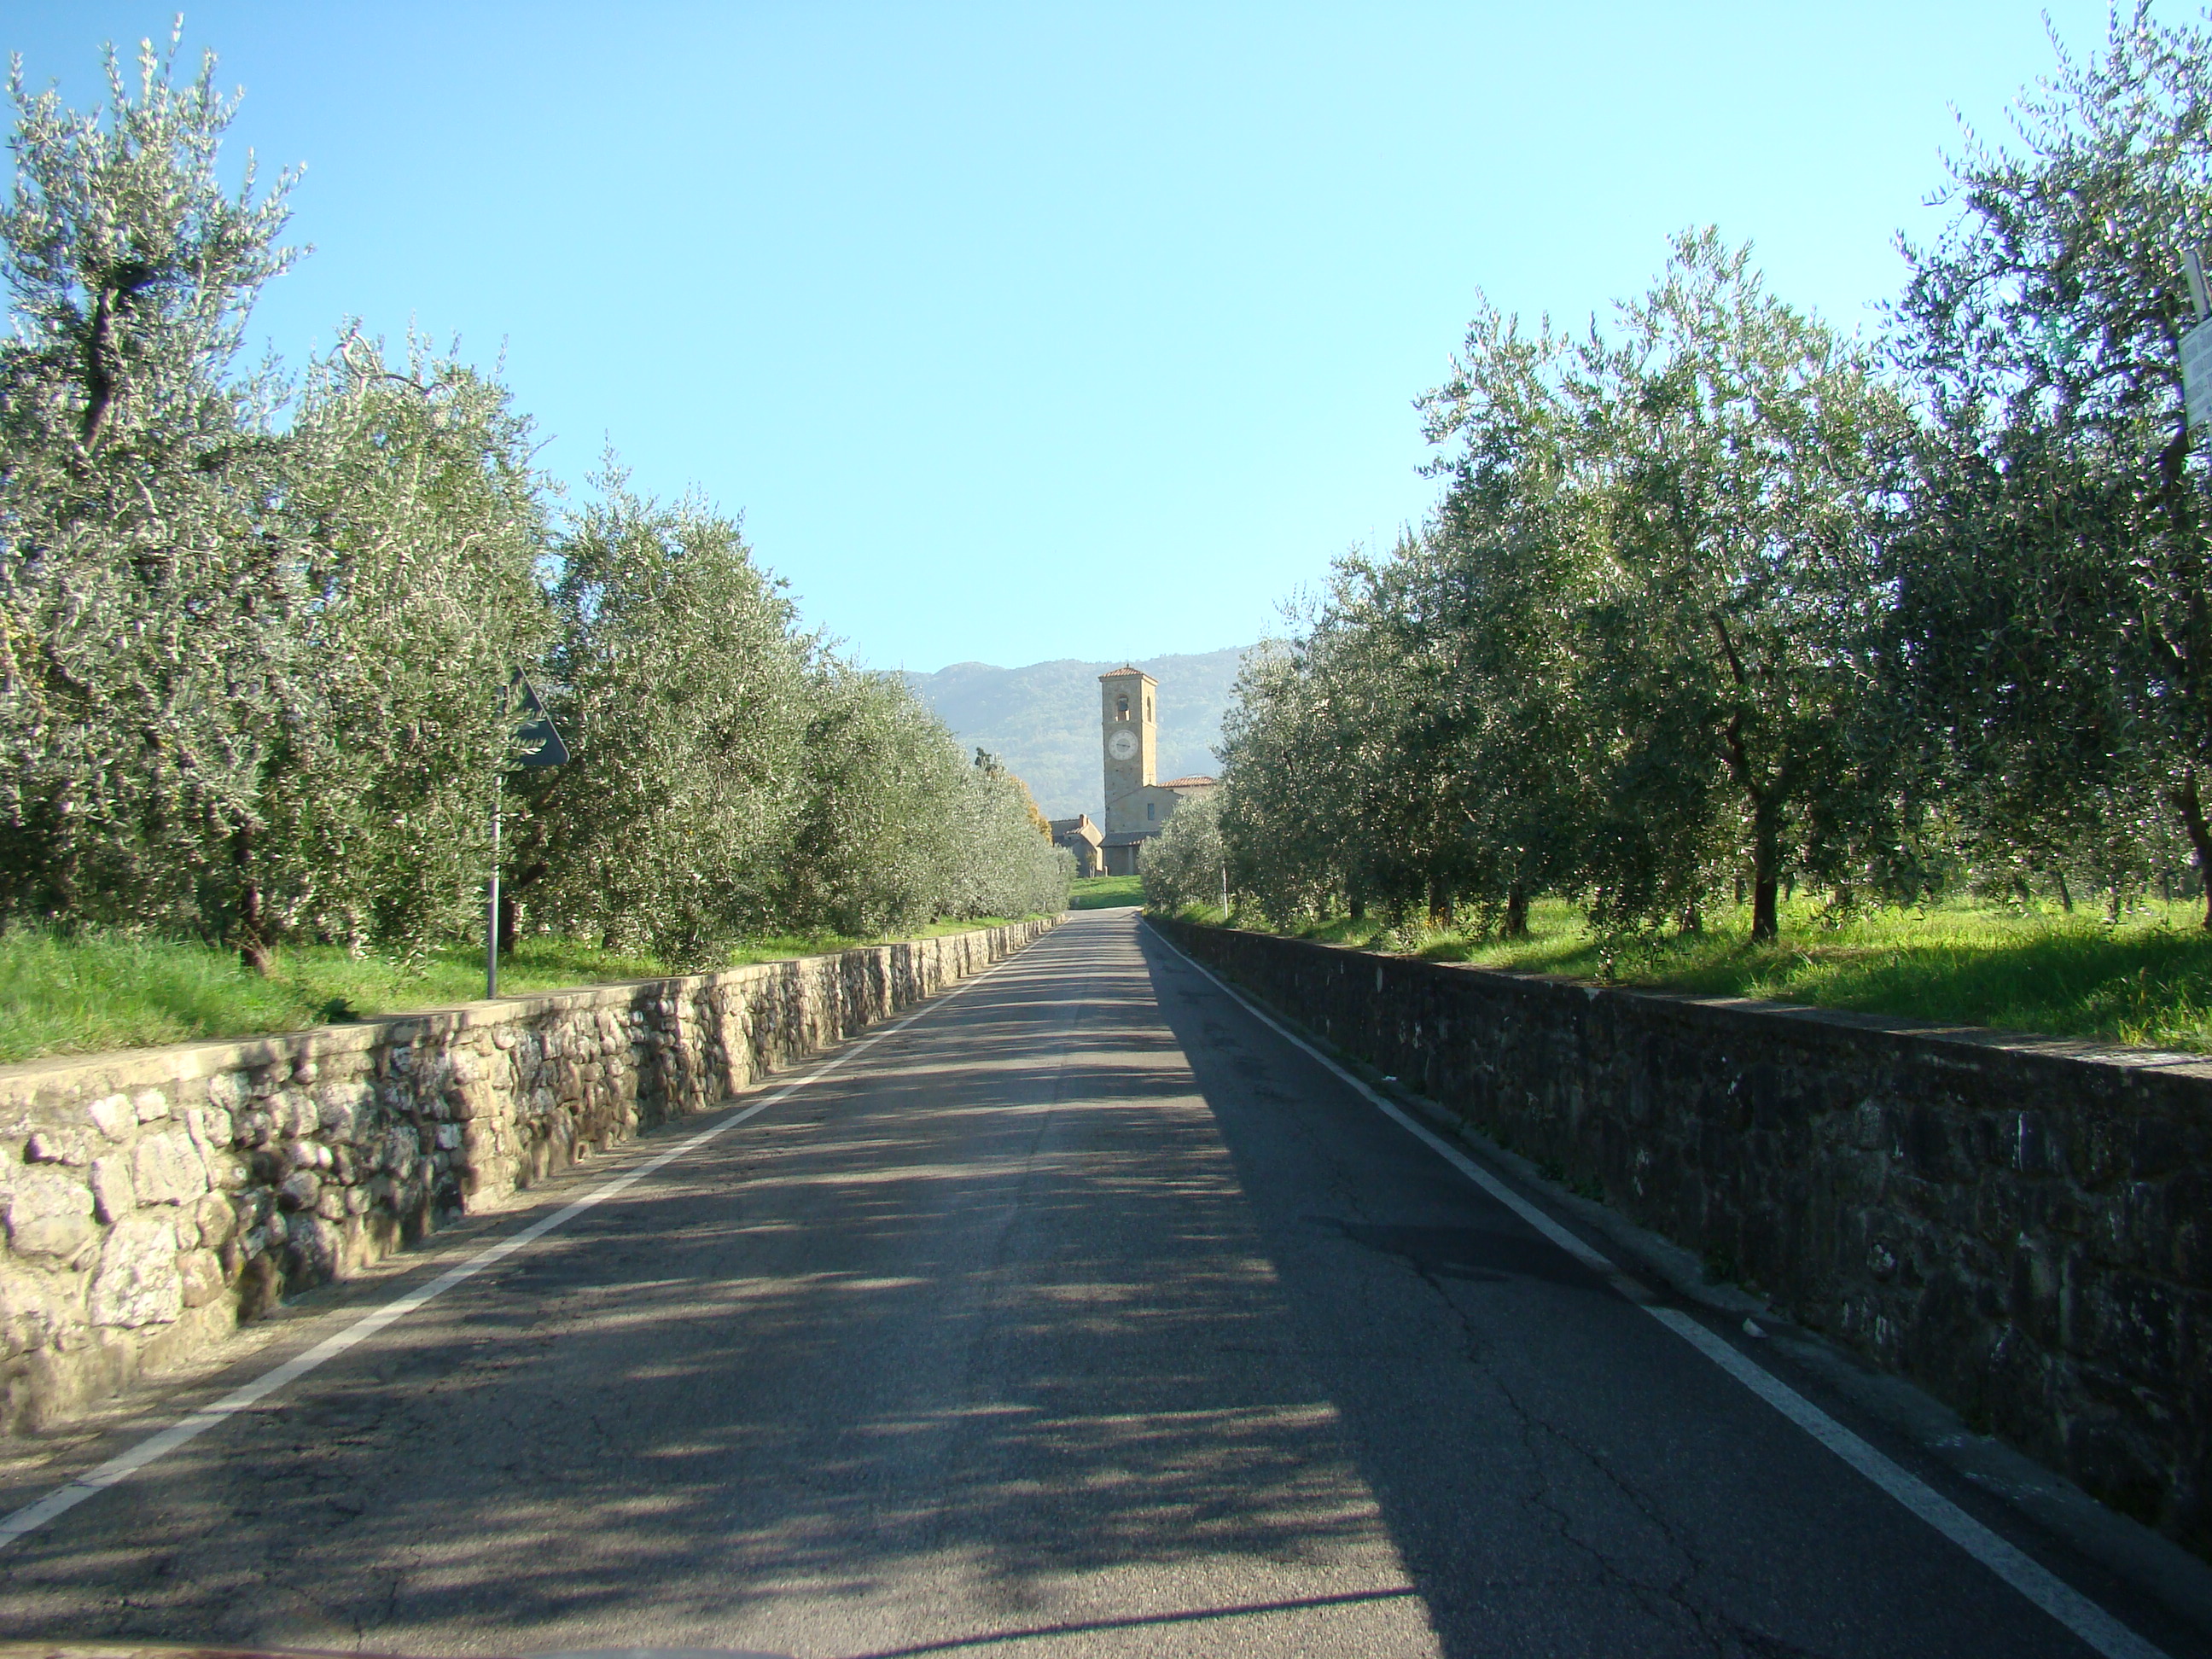 Pieve di Sant'Agata in Arfoli (di Giuliana Profeti)